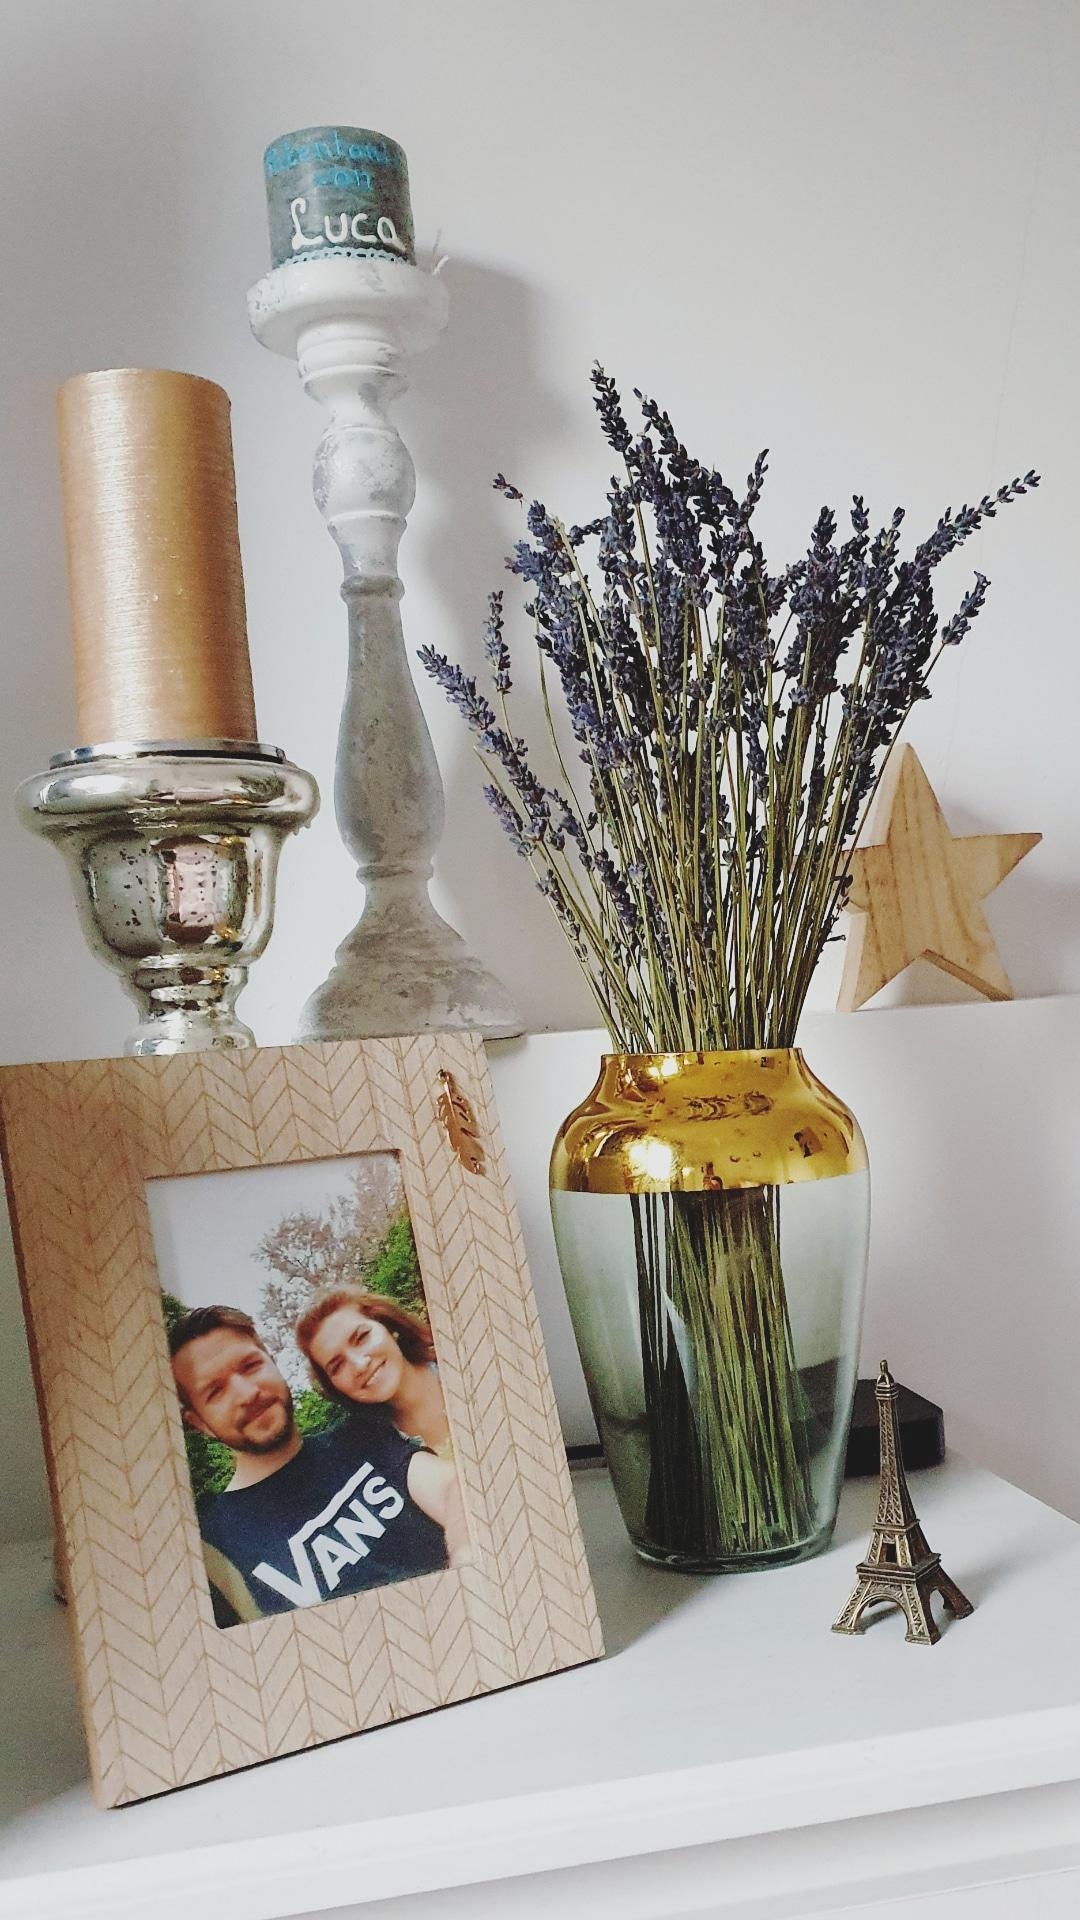 Schlafzimmer- D E T A I L S ♡ 
Getrockneter Lavendel! Er sieht so wunderschön aus! #bedroom #dekoideen #detailliebe 